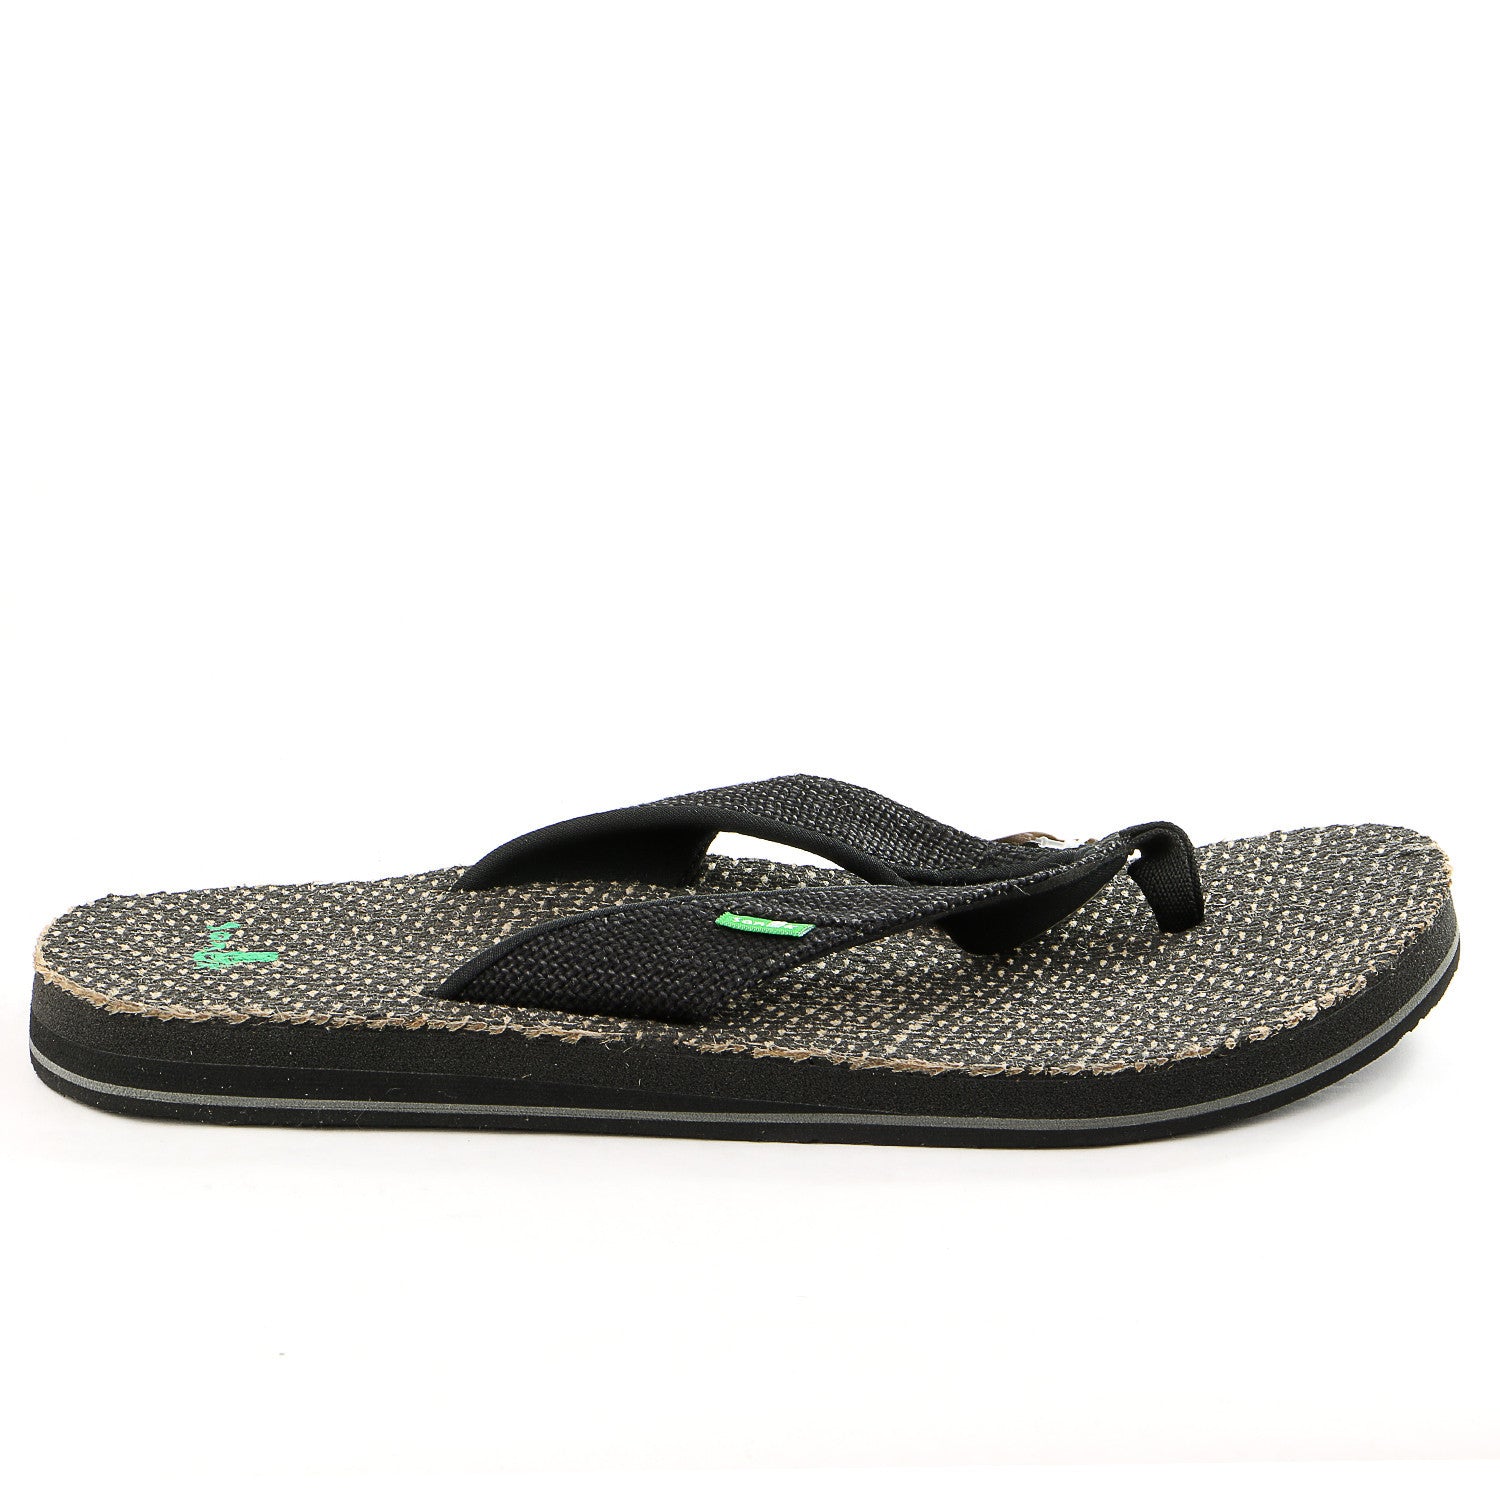 Sanuk Yoga Mat Flip Flops/Flat Sandals, Women's size 6